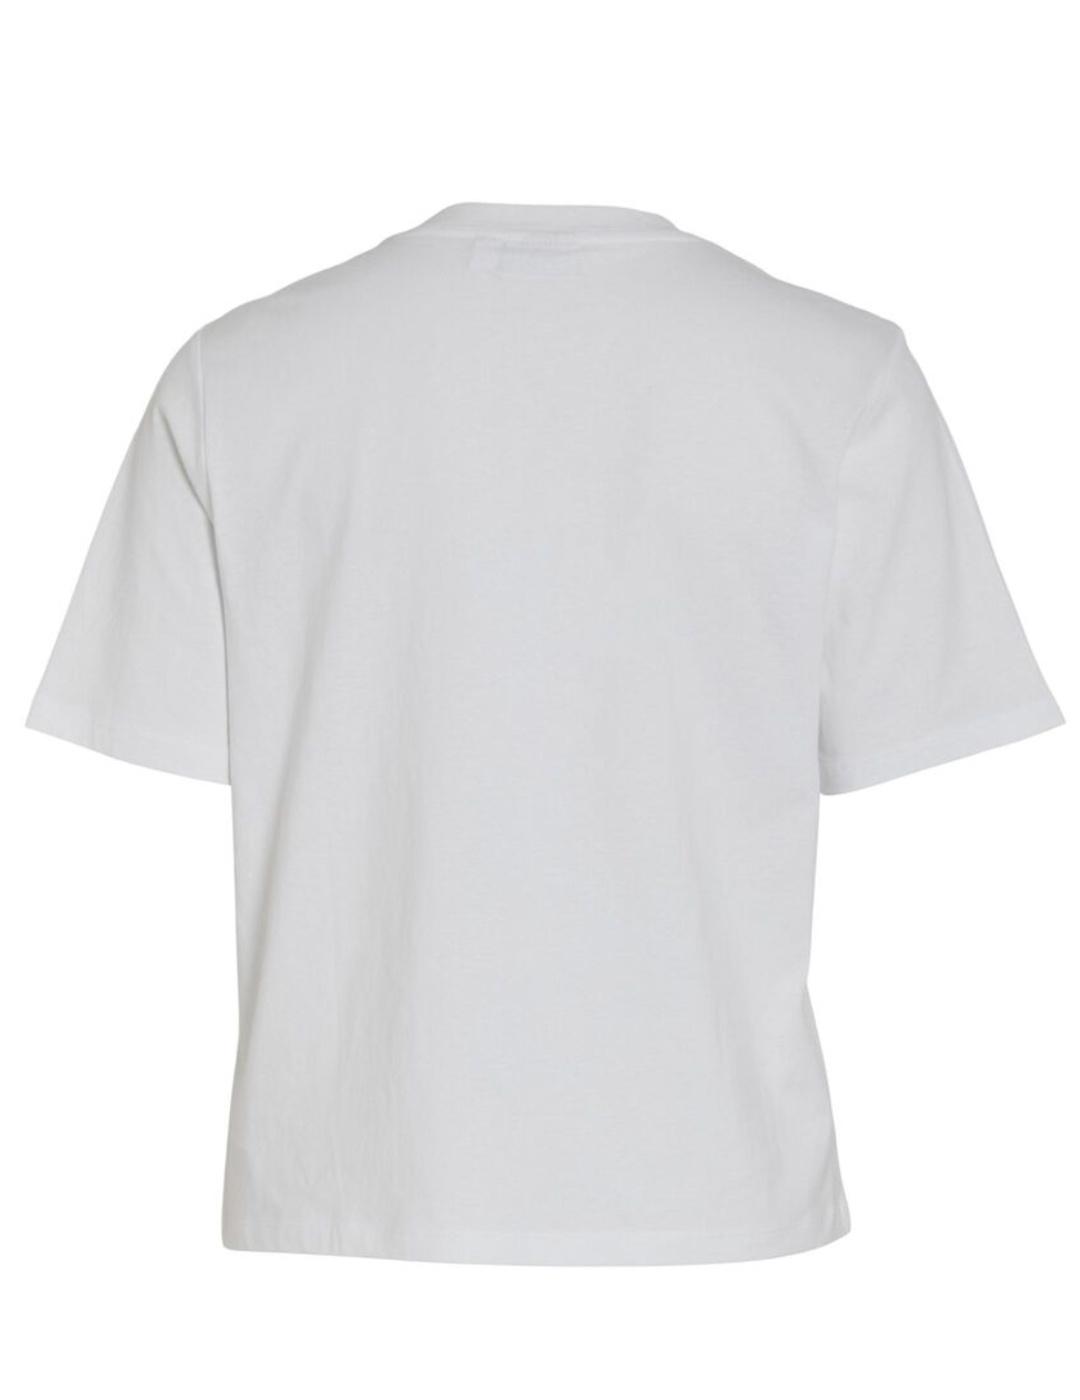 Camiseta Vila Darlene blanco  Regularmanga corta para mujer